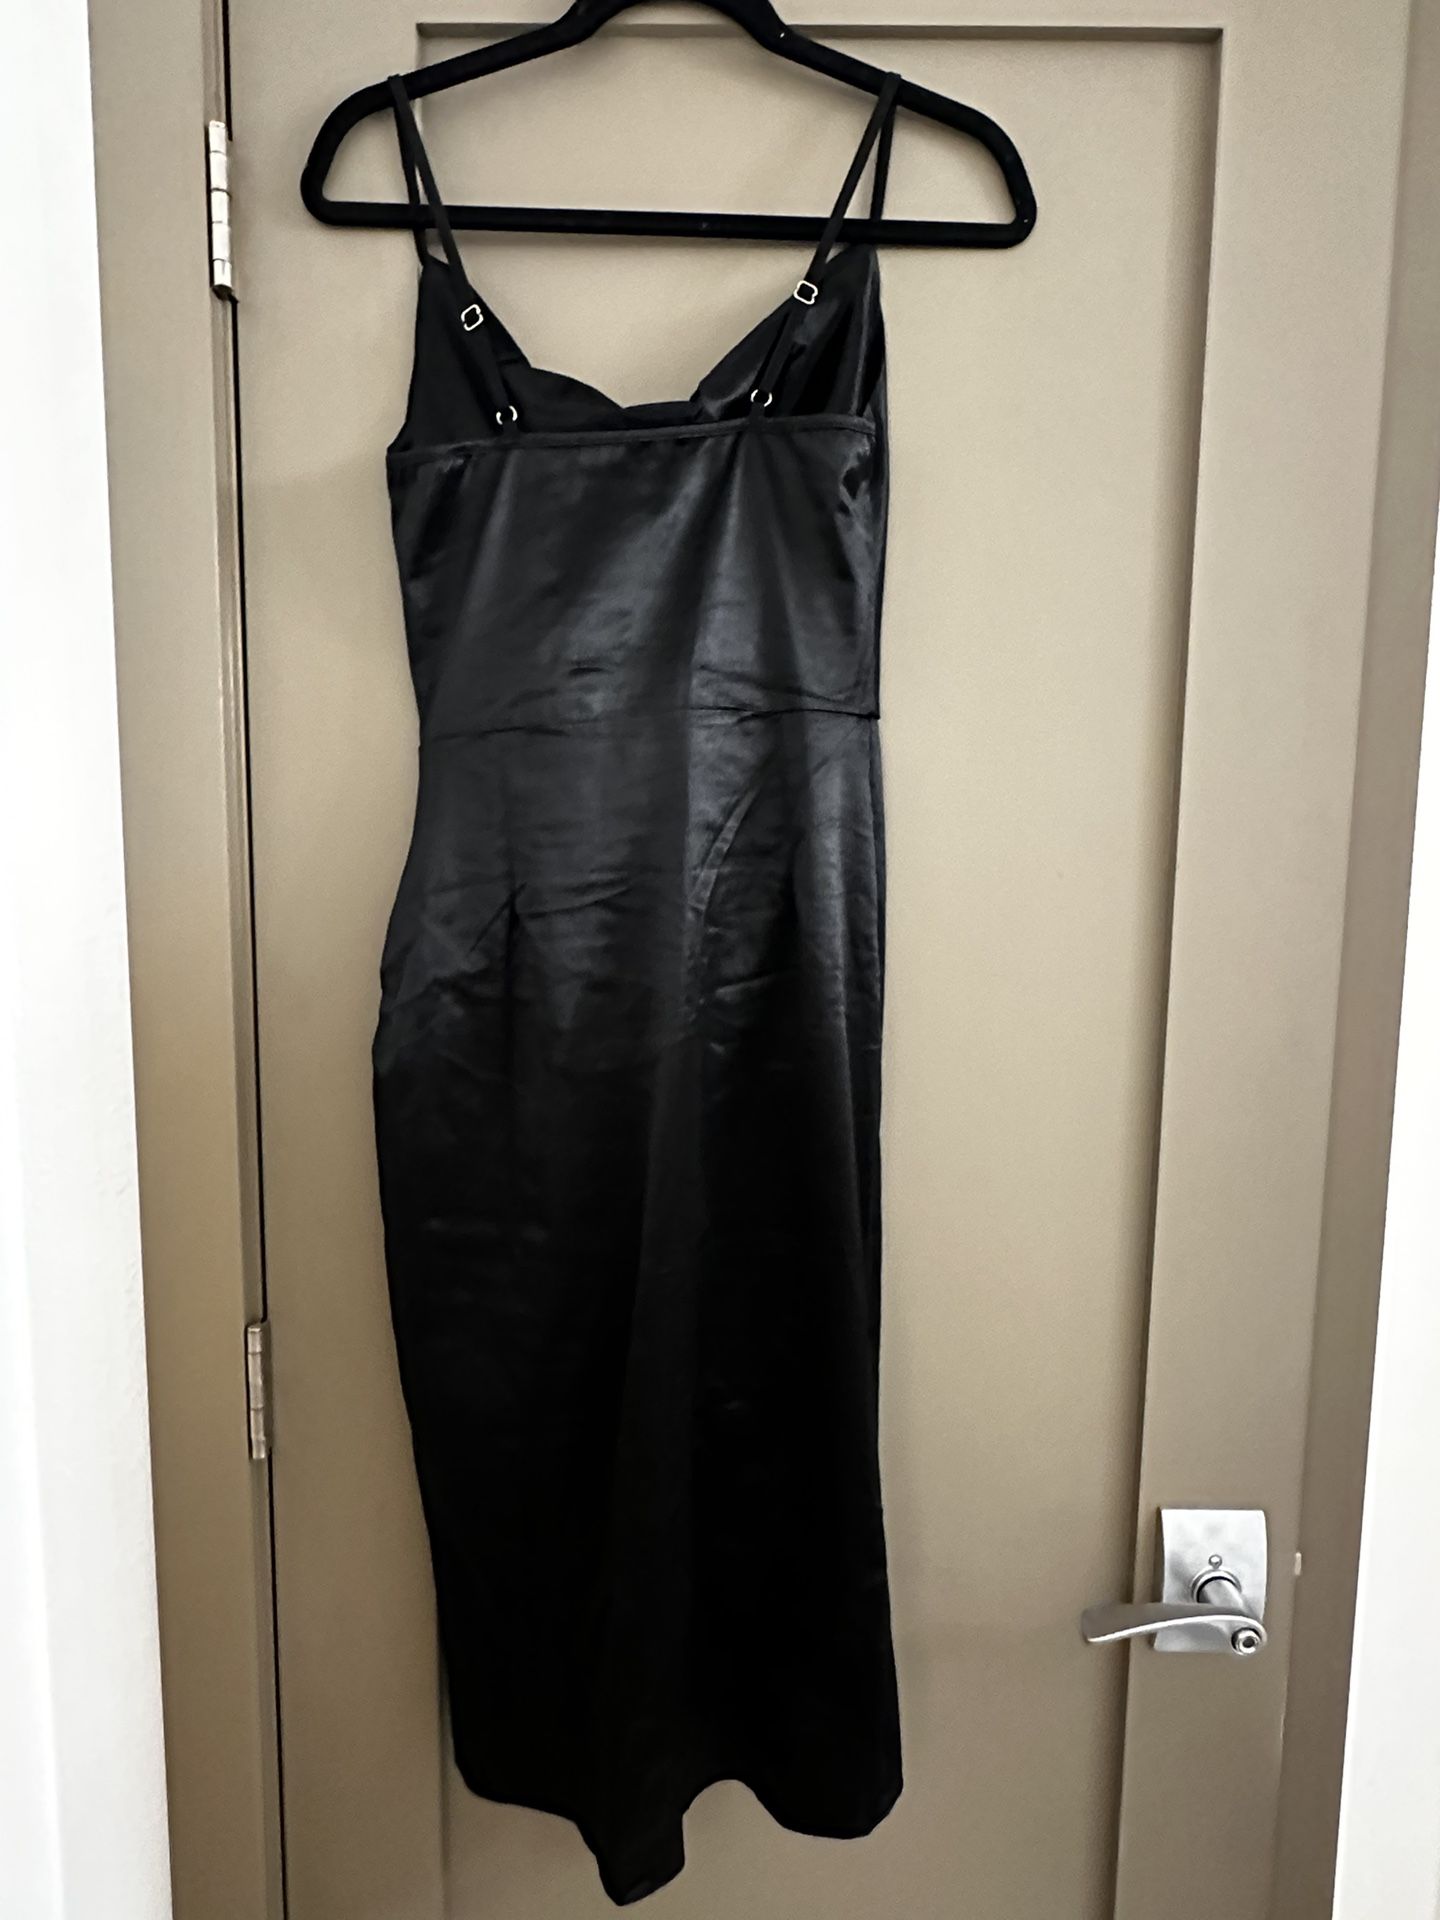 New Black Dress Size S